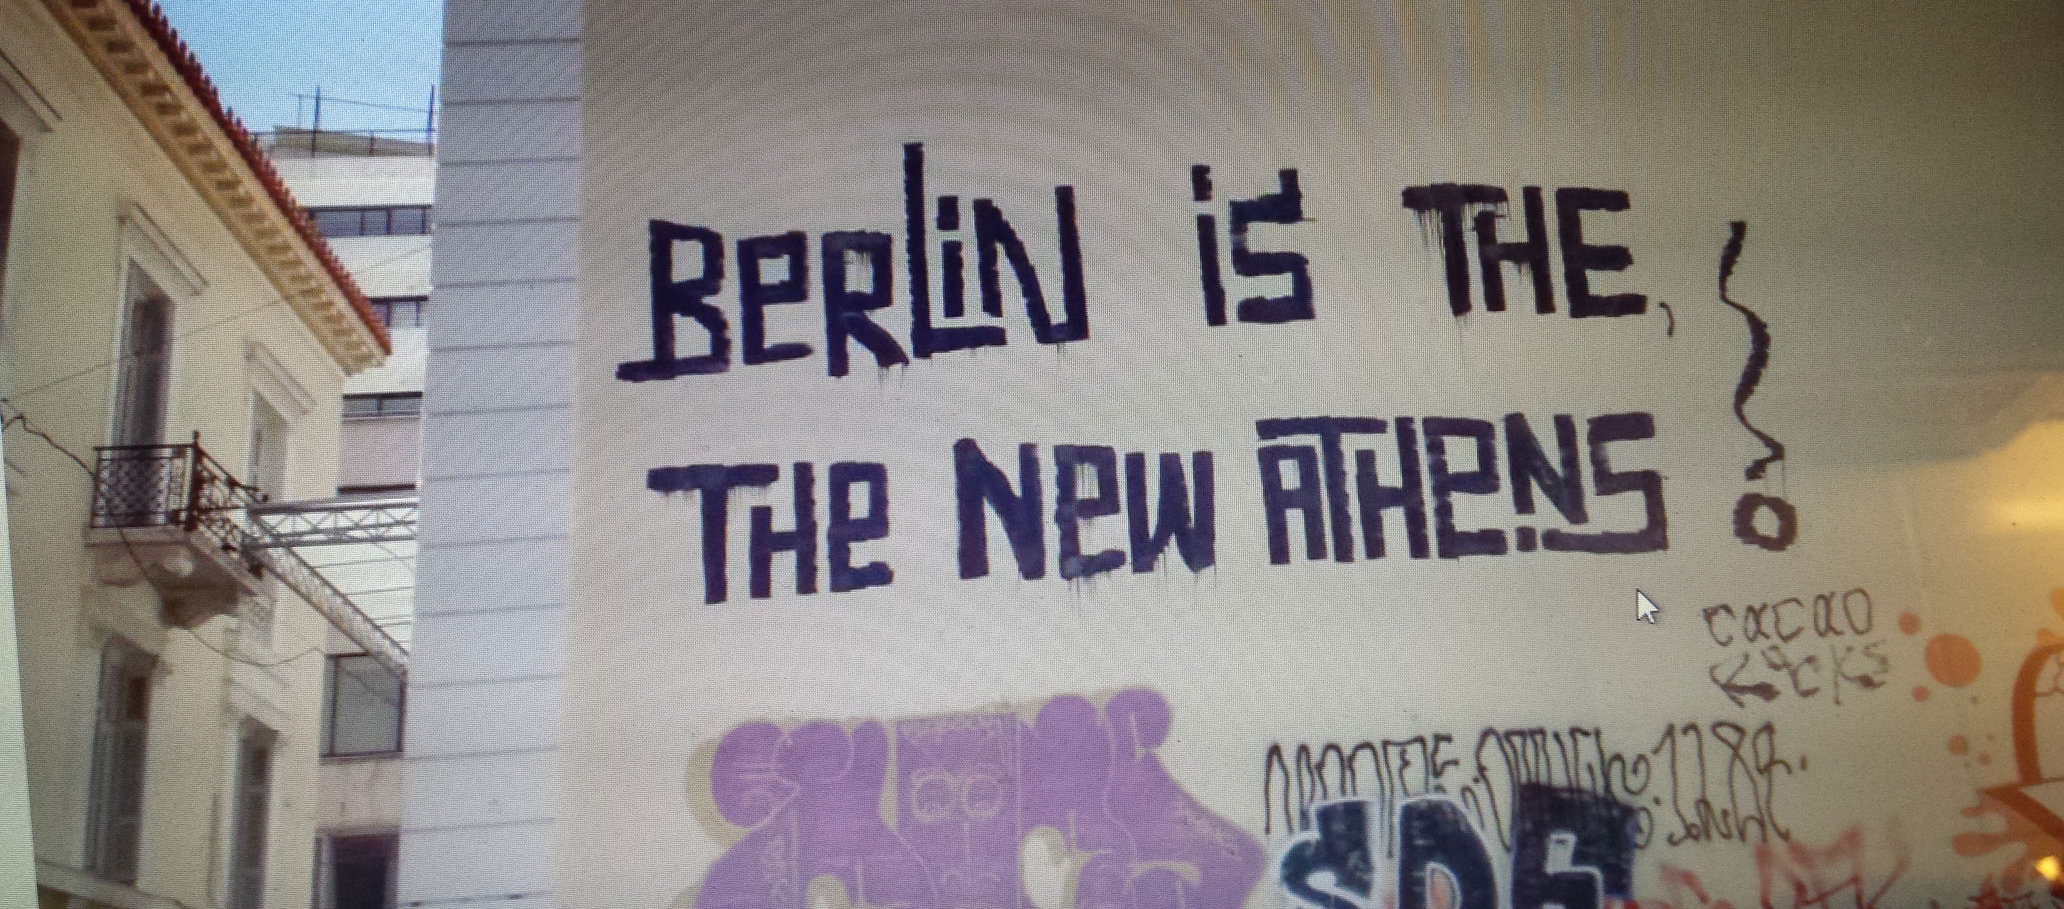 Graffito "Berlin is the new Athens" im Athener Stadtzentrum, 2018 